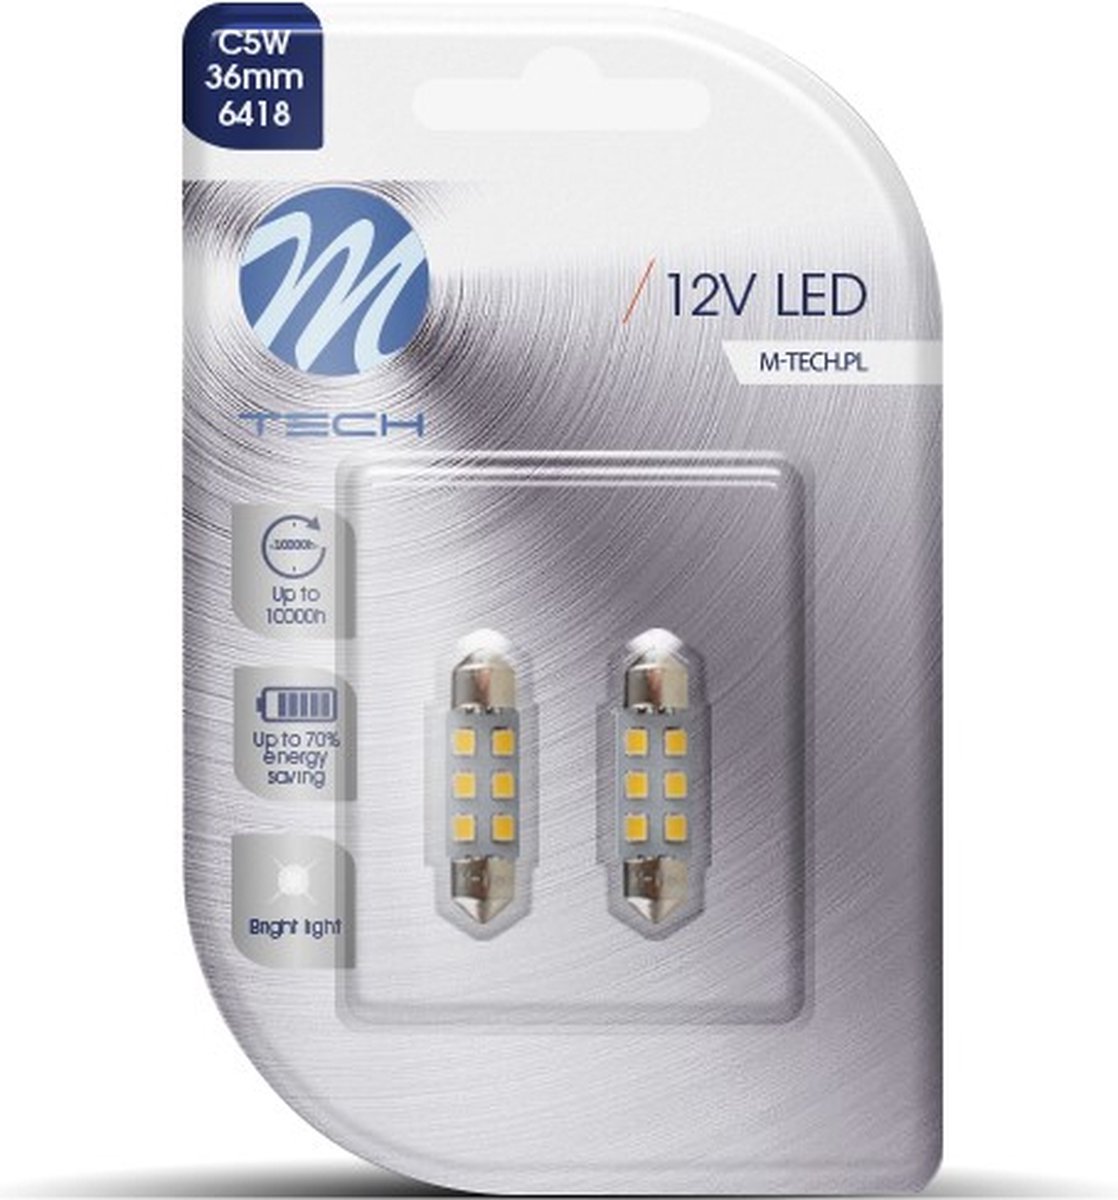 M-Tech LED C5W 12V 36mm - Basis 6x Led diode - Wit - Set